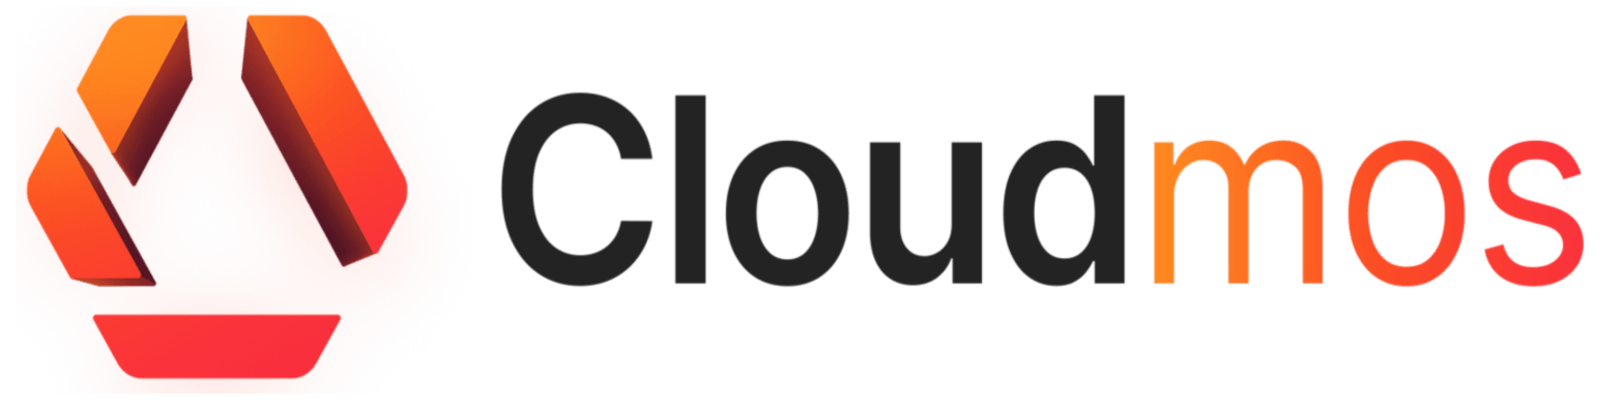 Cloudmos Logo